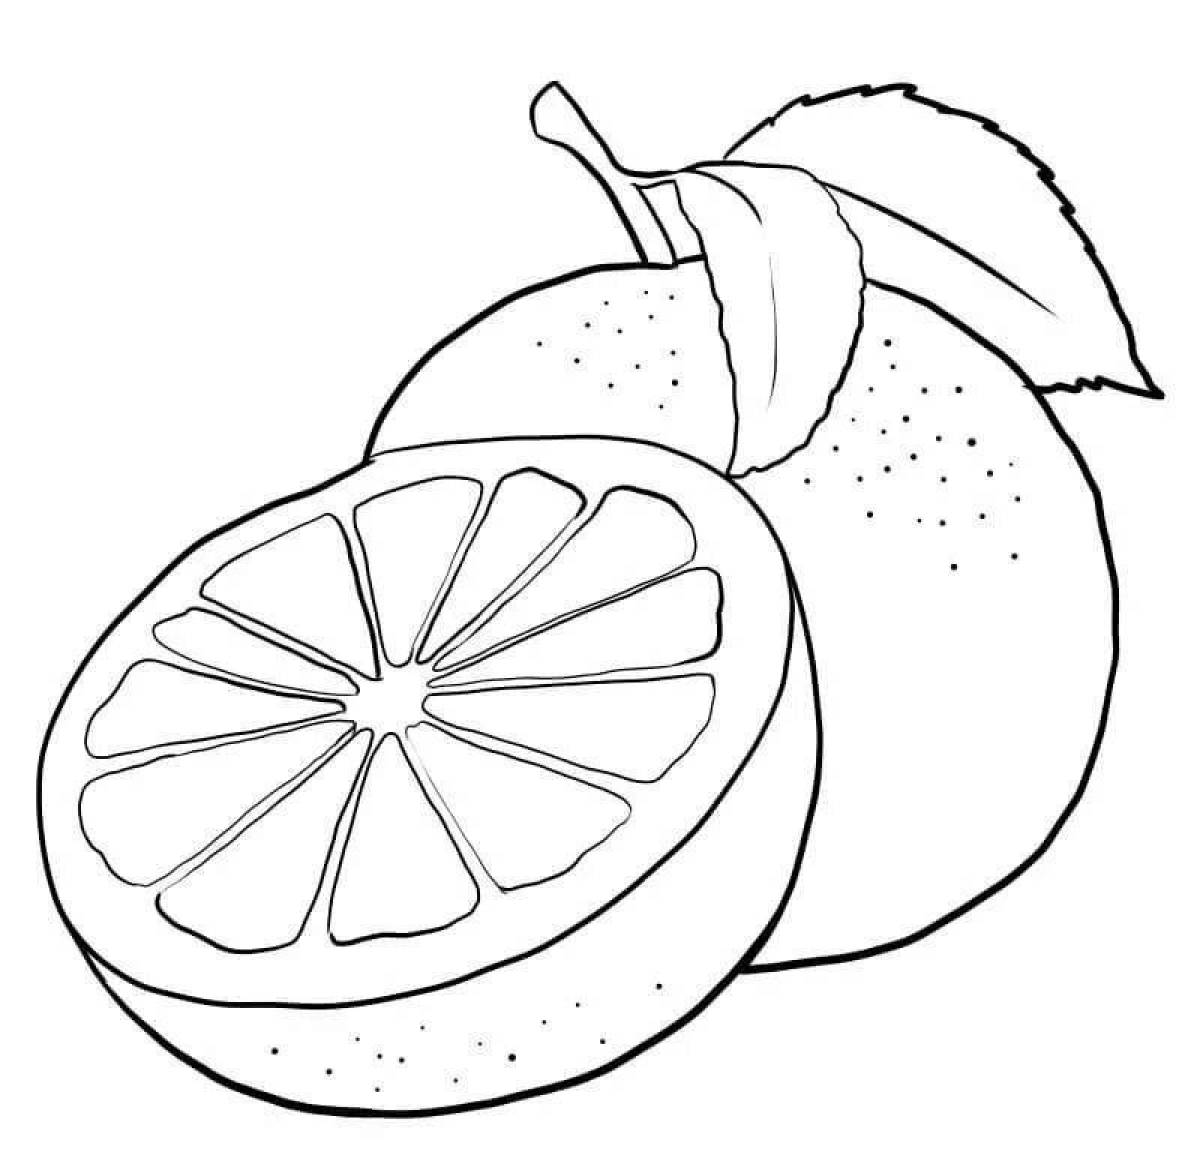 Coloring page hypnotic grapefruit